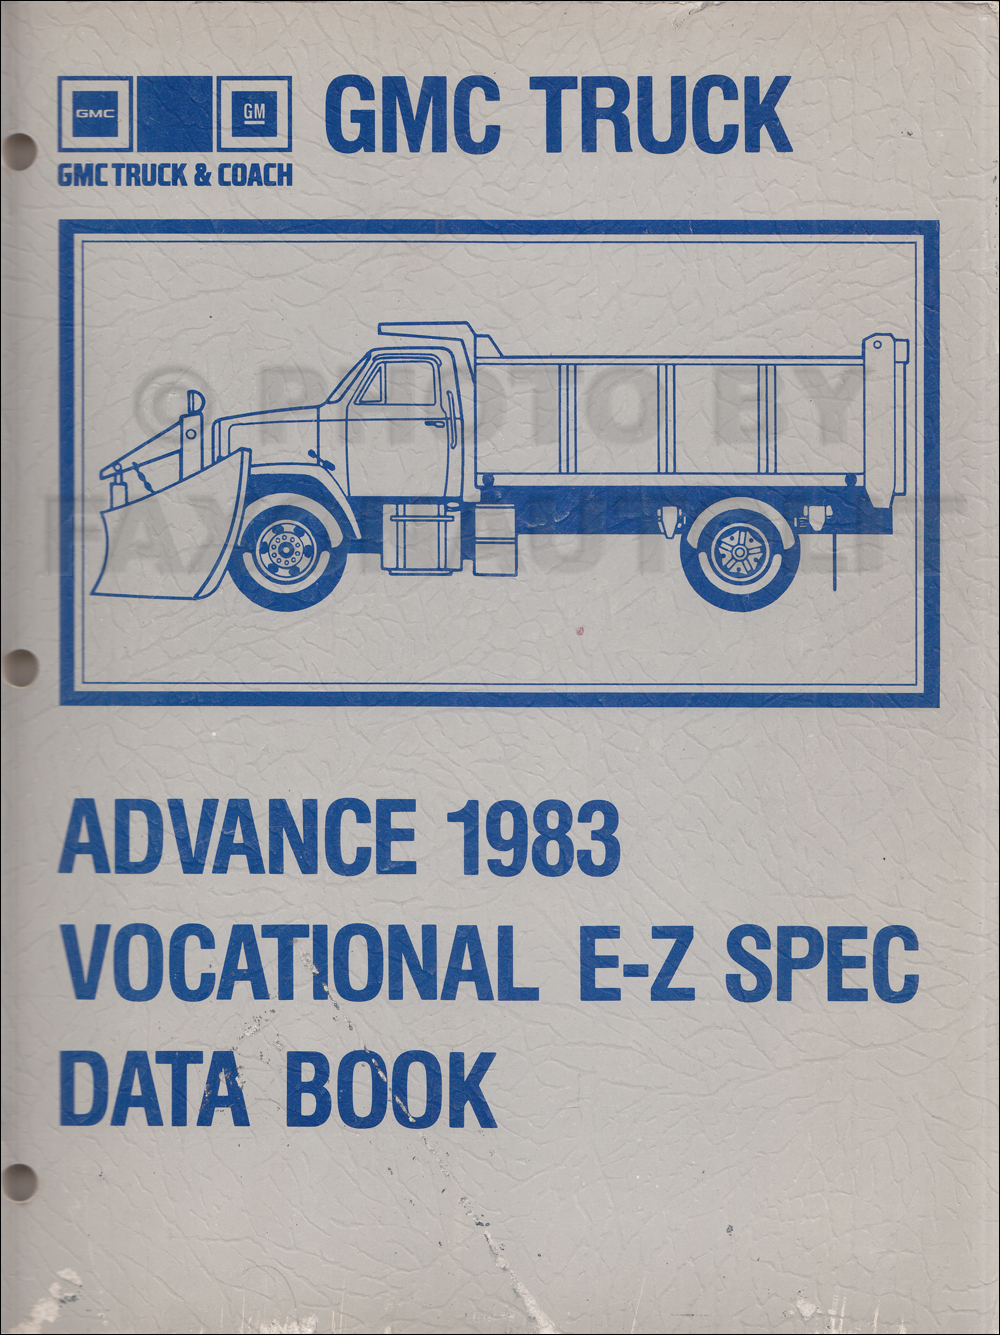 1982 GMC Brigadier Foldout Wiring Diagram Electrical Schematic Heavy Truck